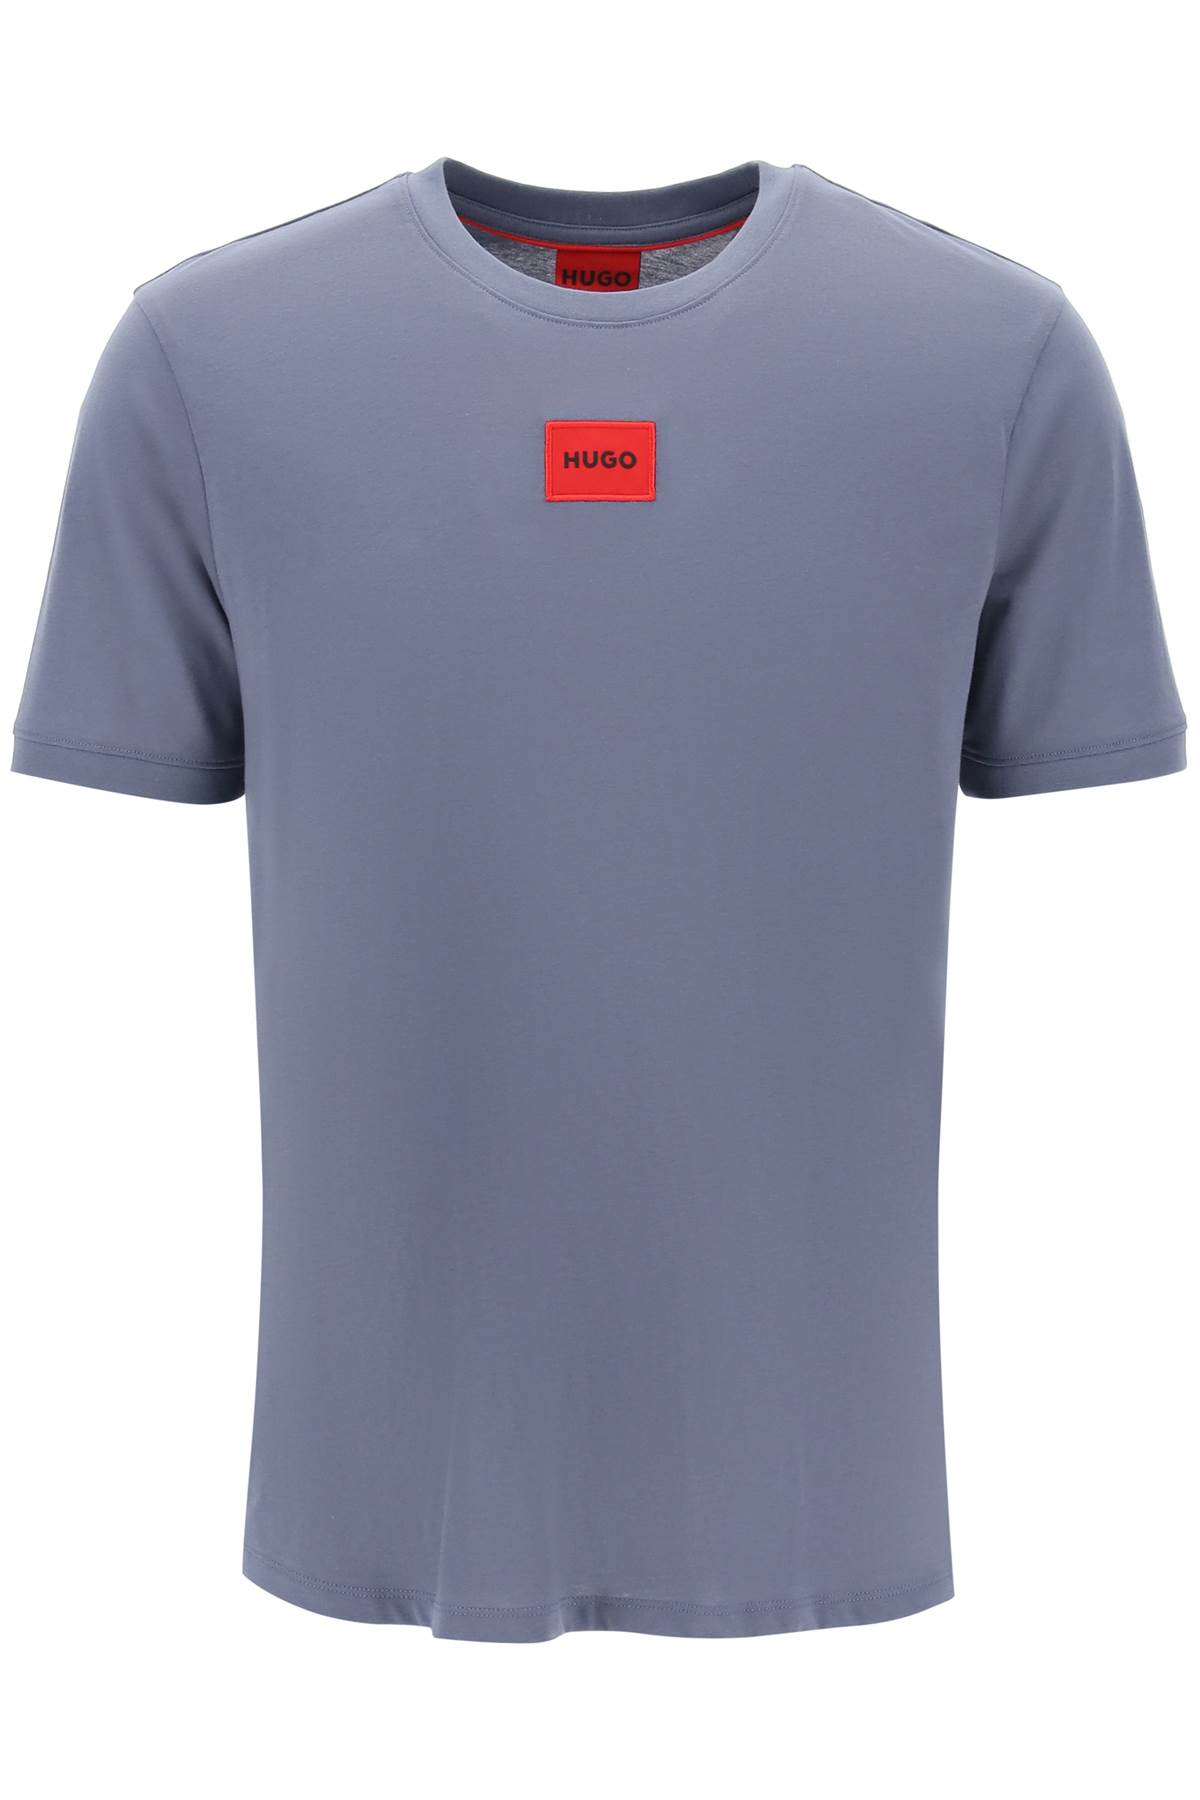 Hugo Boss Diragolino Logo T-shirt In Open Blue (light Blue)